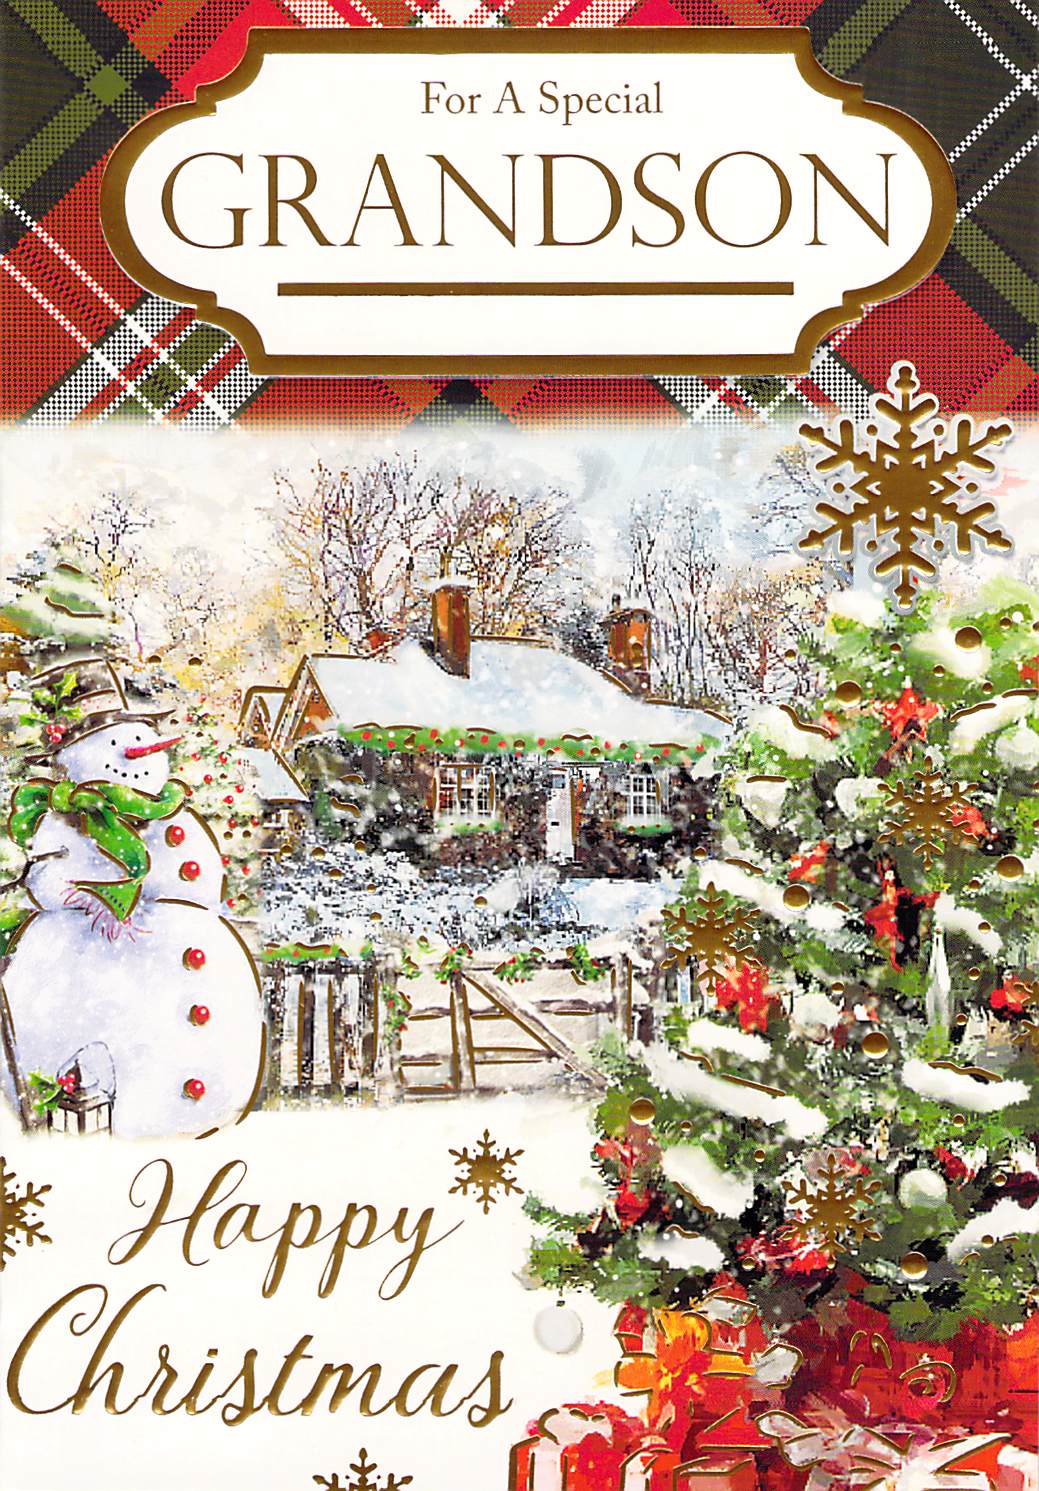 Christmas - Grandson - Snowy scene - Greeting Card - Multi Buy Discount